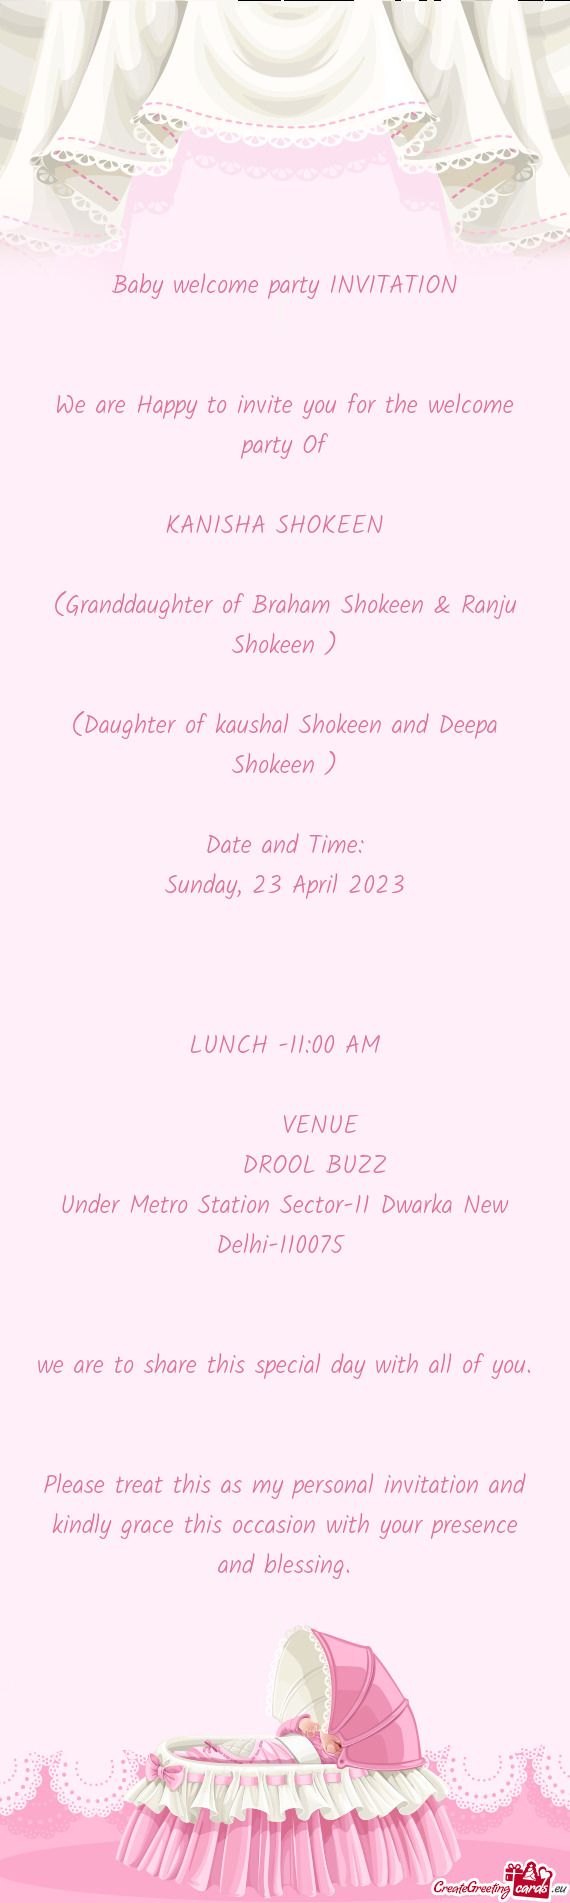 (Daughter of kaushal Shokeen and Deepa Shokeen )